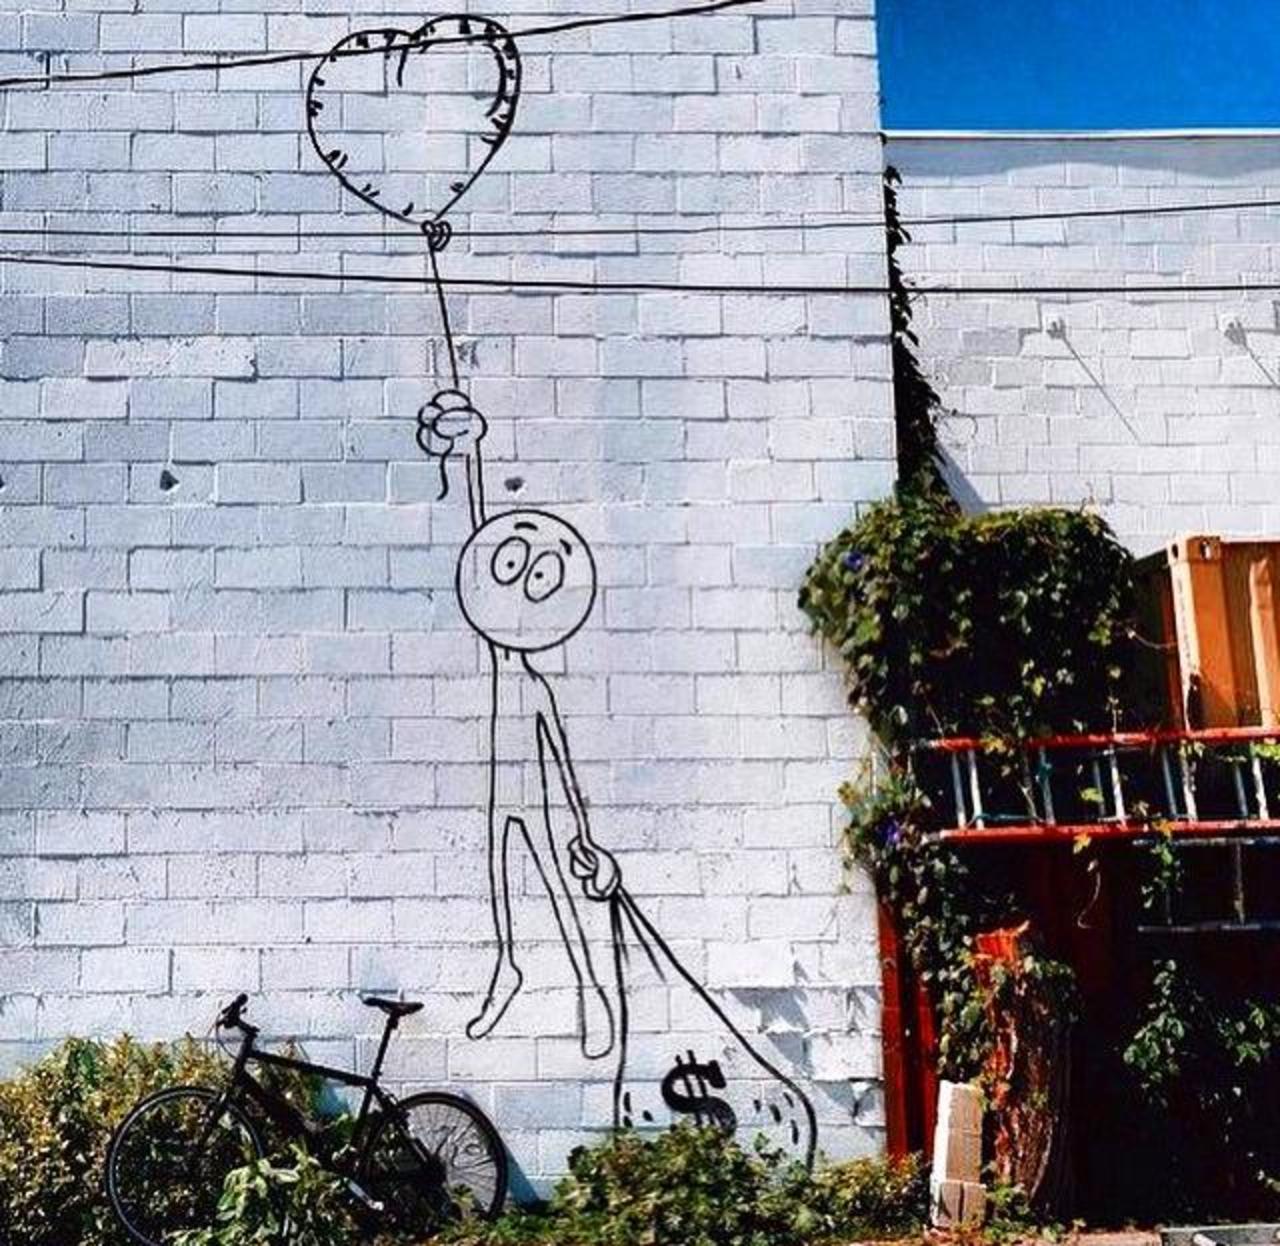 "@GoogleStreetArt: Love or money?
Street Art by Kaia Spire in LA 

#art #arte #graffiti #streetart http://t.co/QGDS1MckKy"